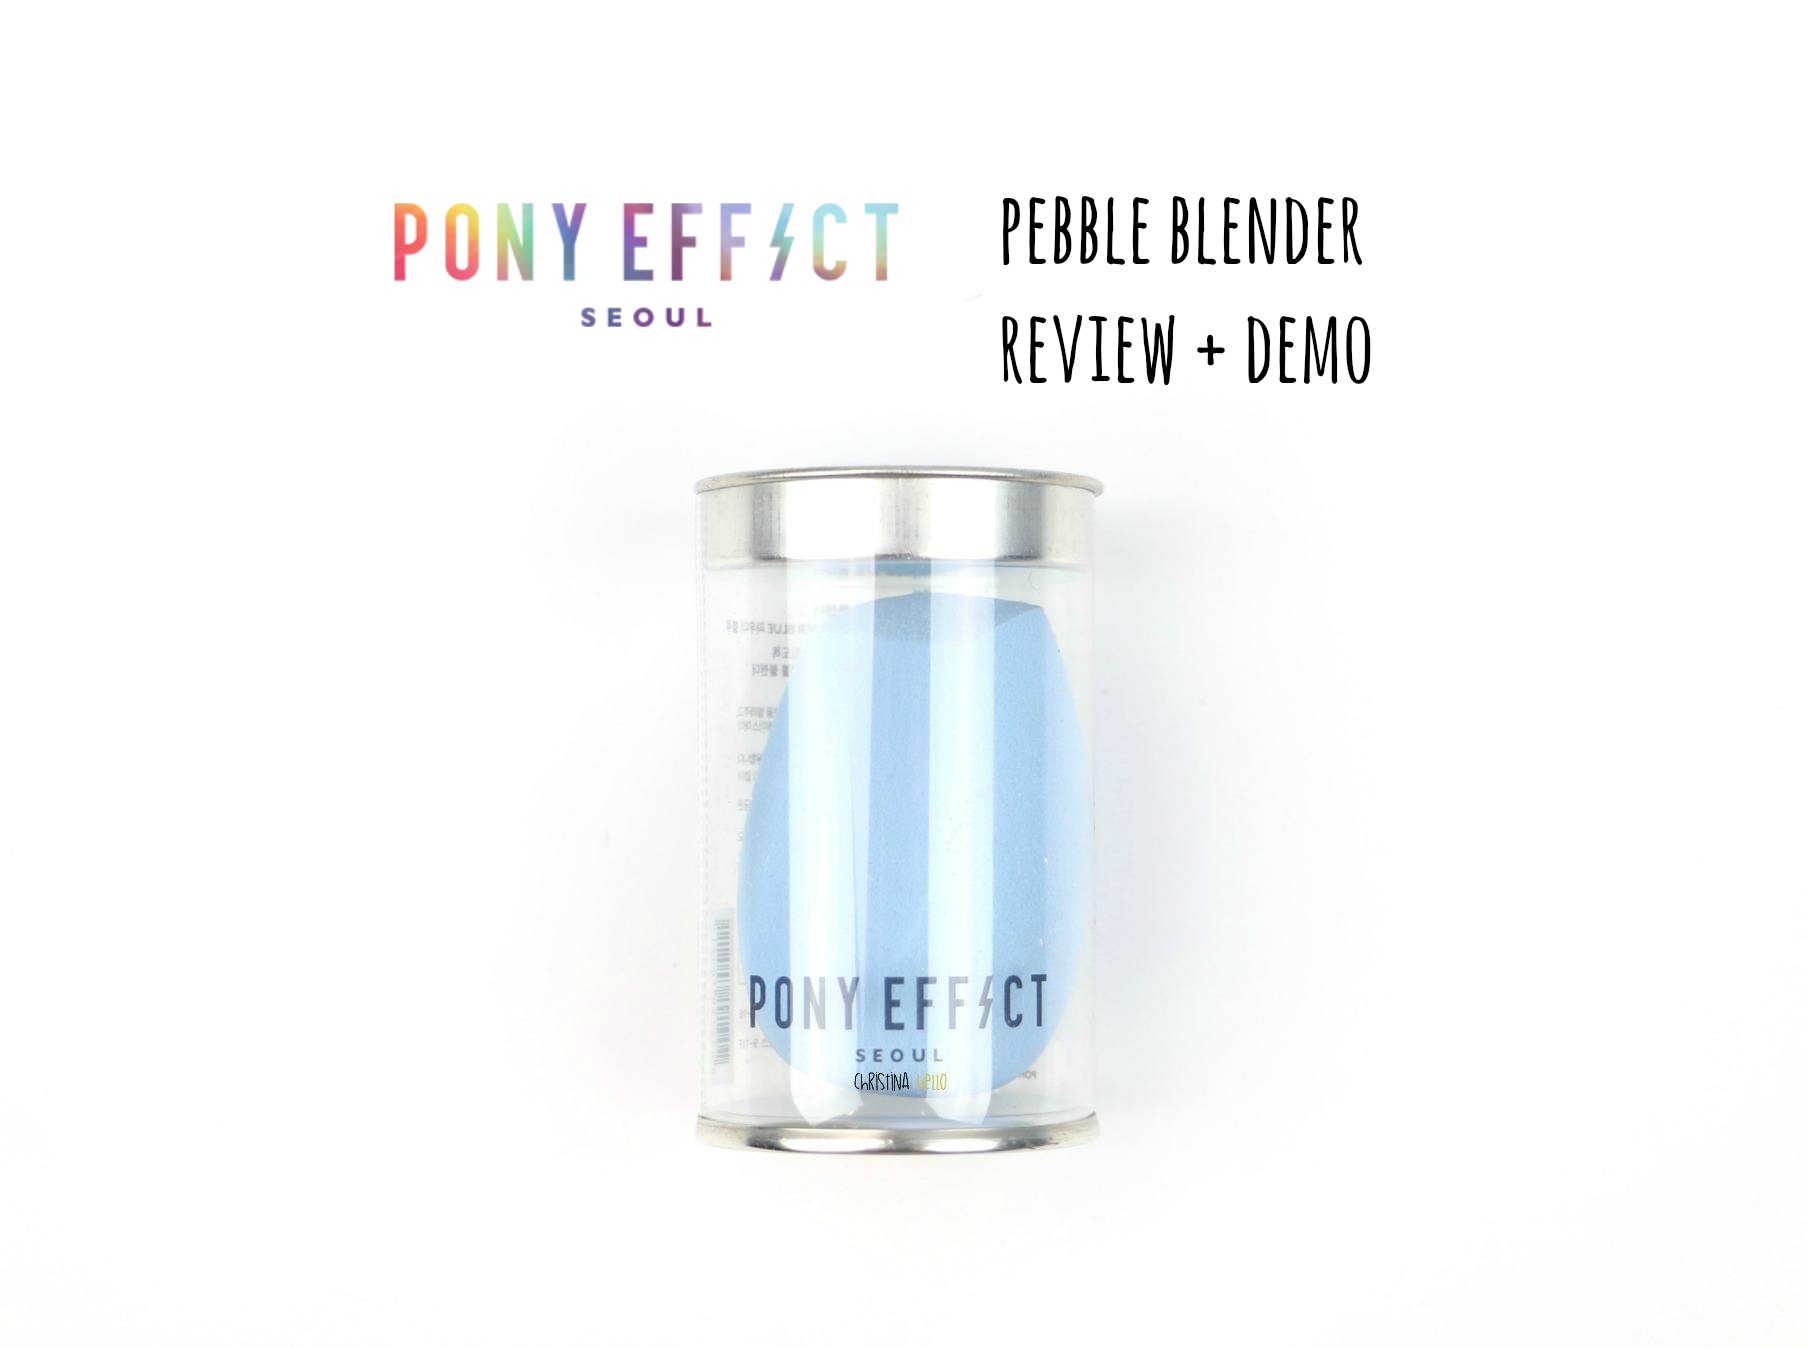 Pony effect pebble blender review